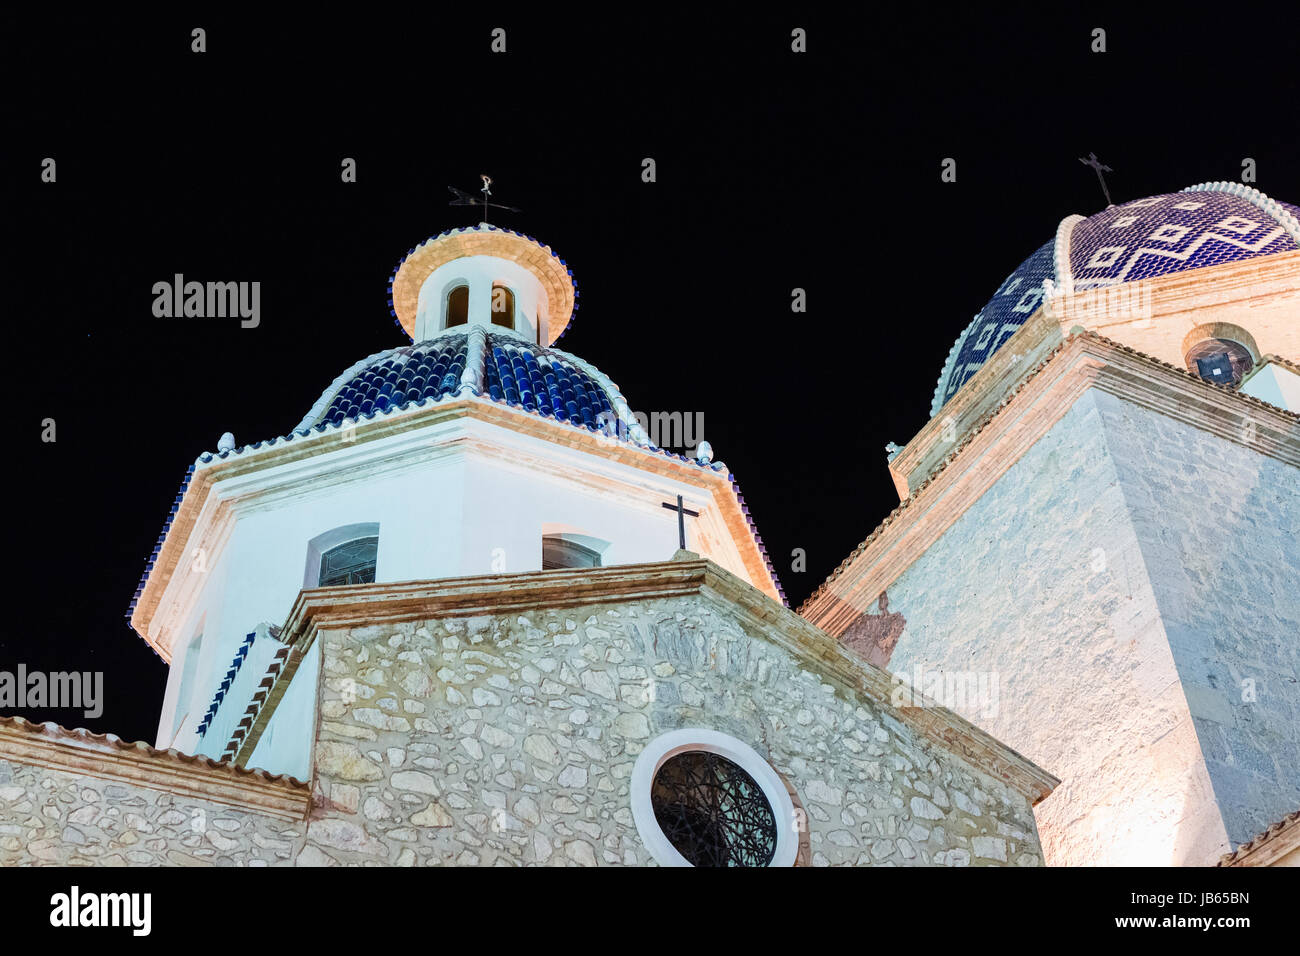 Cathedral of Altea illuminated at night, Alicante, Benidorm, Altea, Costa Blanca, Spain Stock Photo